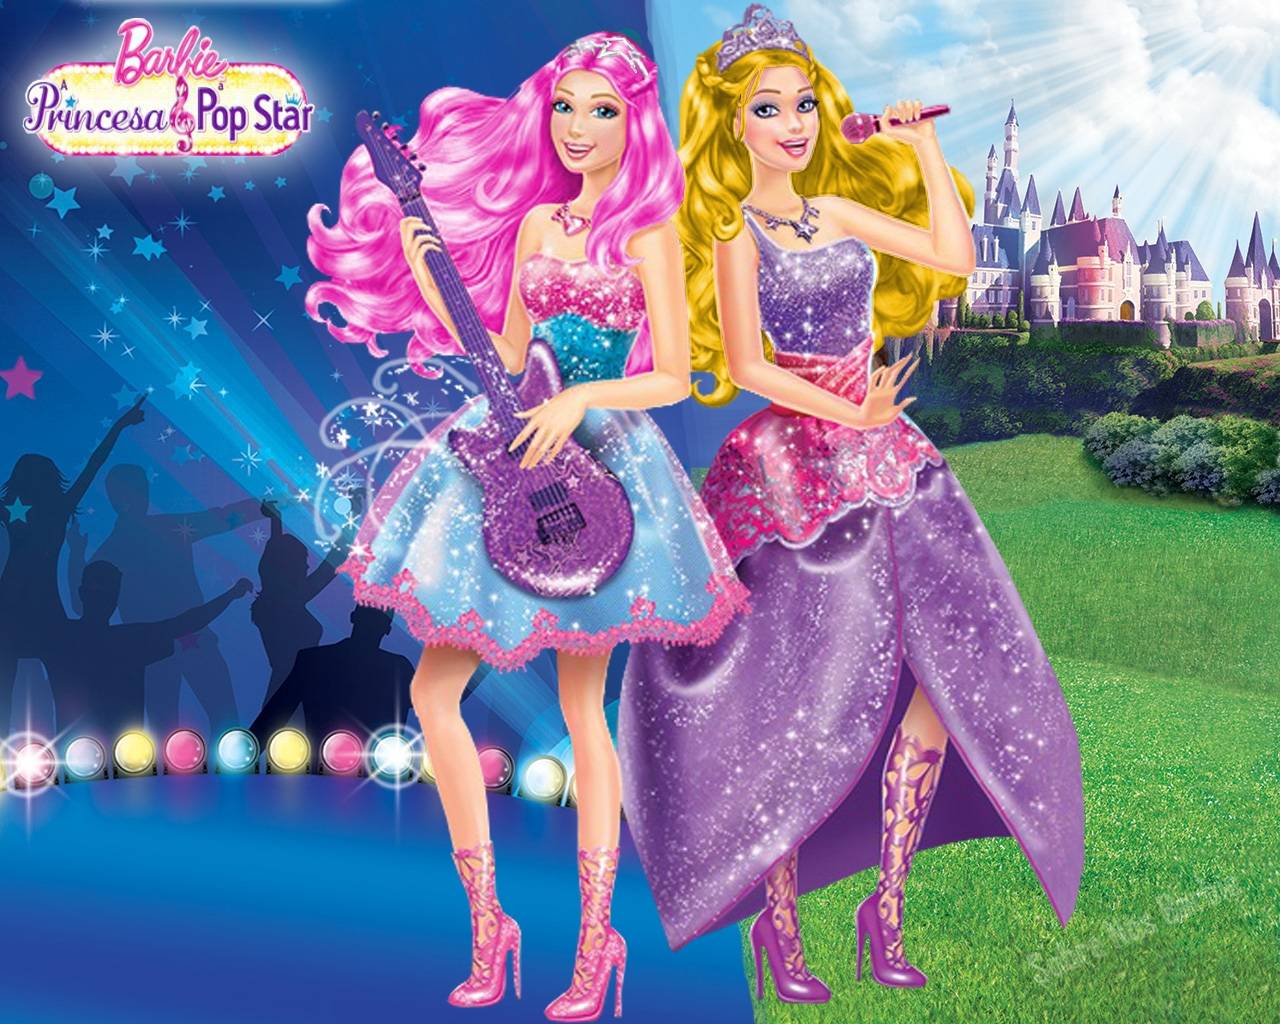 Doll Wallpapers Hd Pixelstalk
beautiful Dolls Sweet - Barbie Princess And The Popstar - HD Wallpaper 